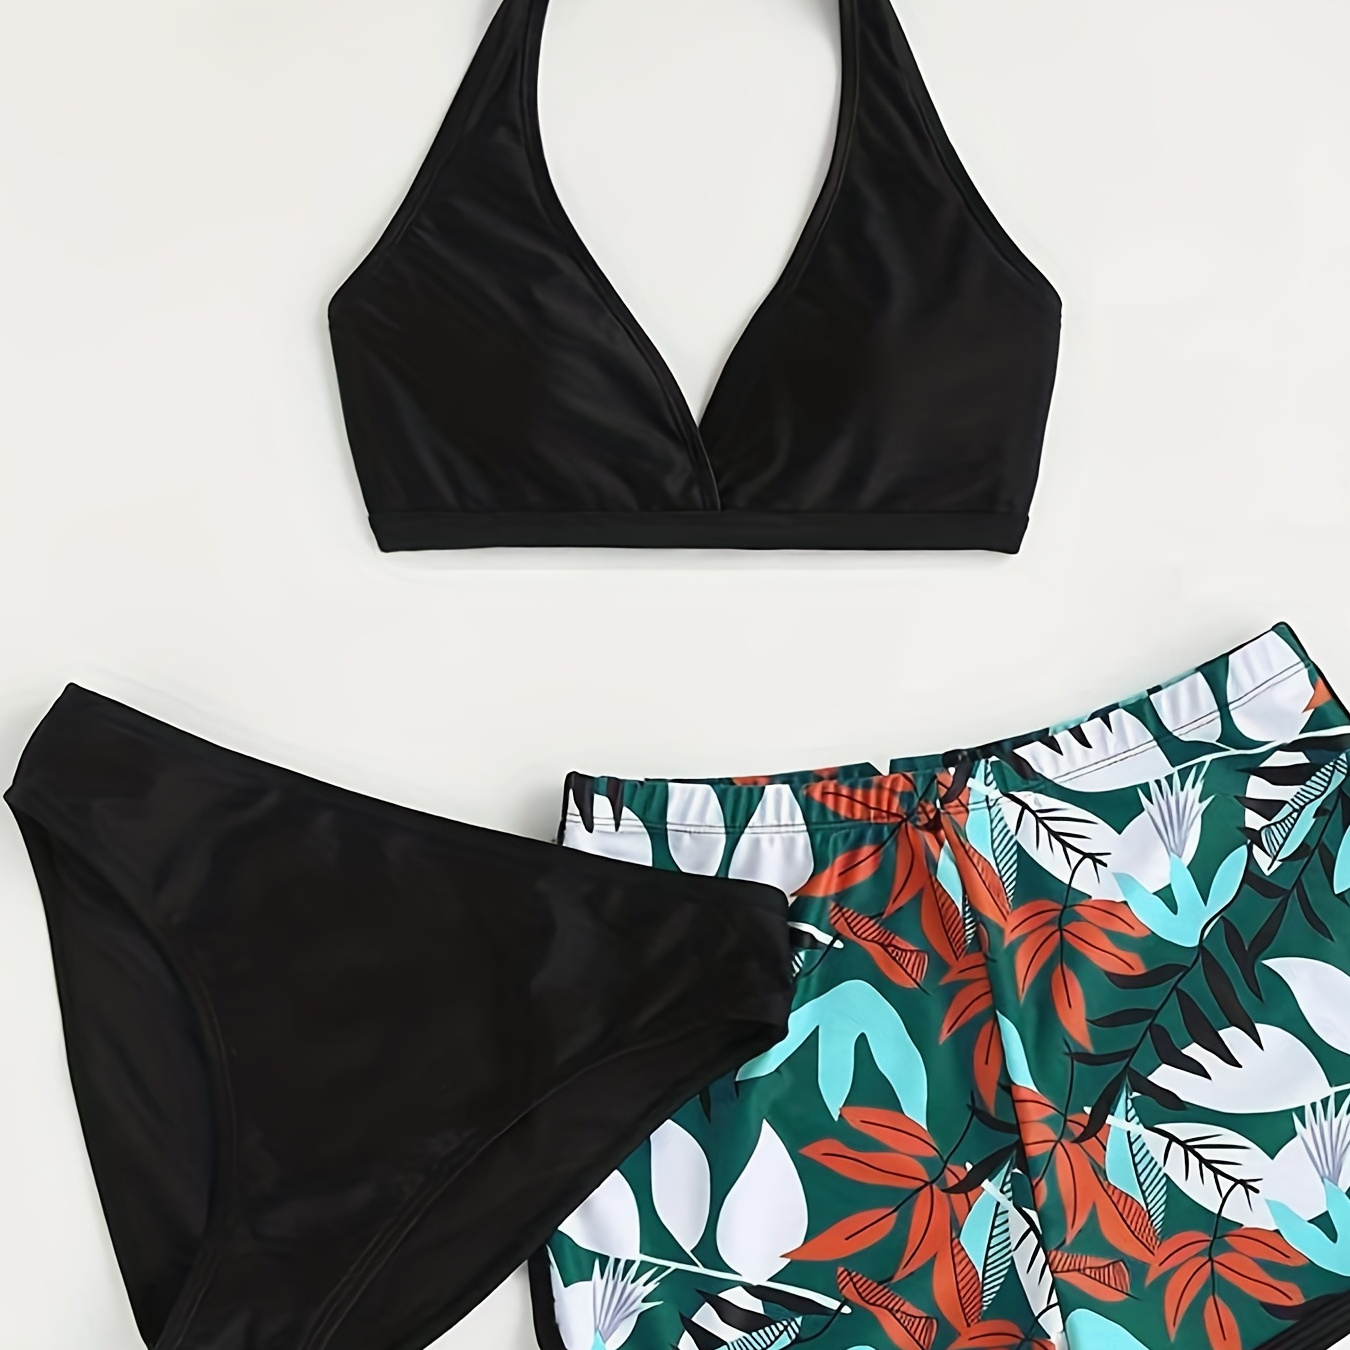 

Leaf Print Halter Black 3 Piece Set Swimsuit, Tie Neck Solid Balck Bikini Set With Elastic Waistband Stretchy Boxer Bottoms Shorts, Women's Swimwear & Clothing Triangle Top